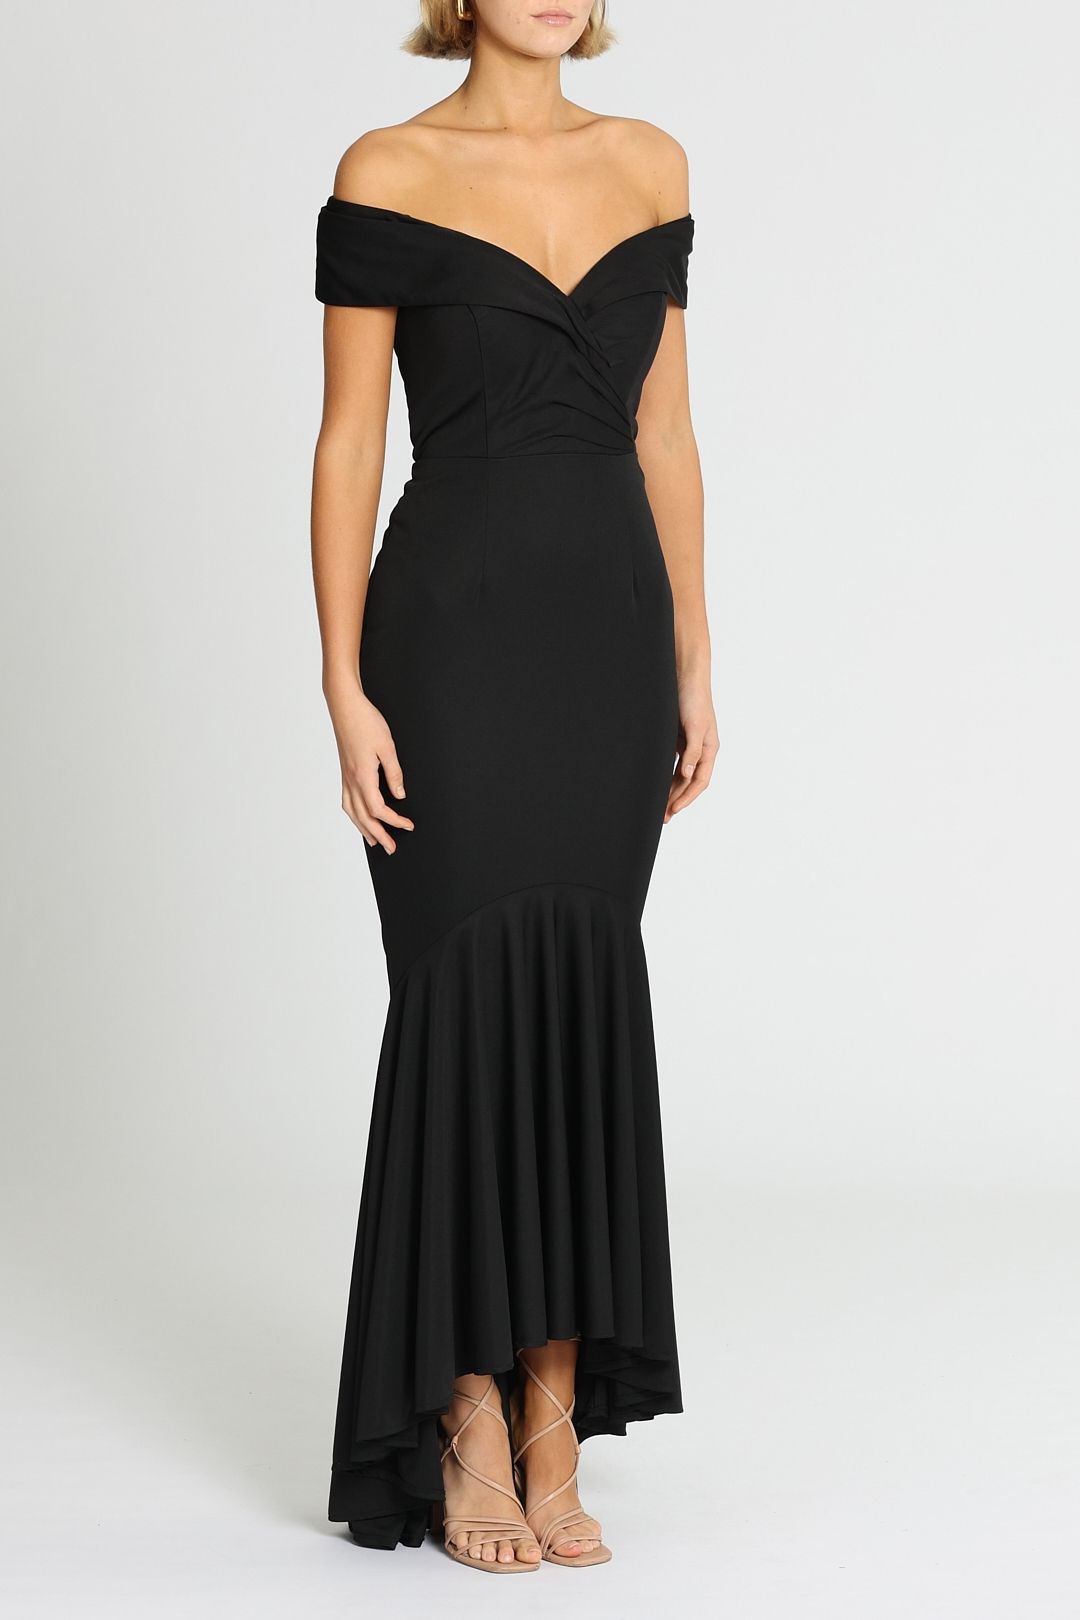 Elyse Gown in Black by Jadore for Rent | GlamCorner